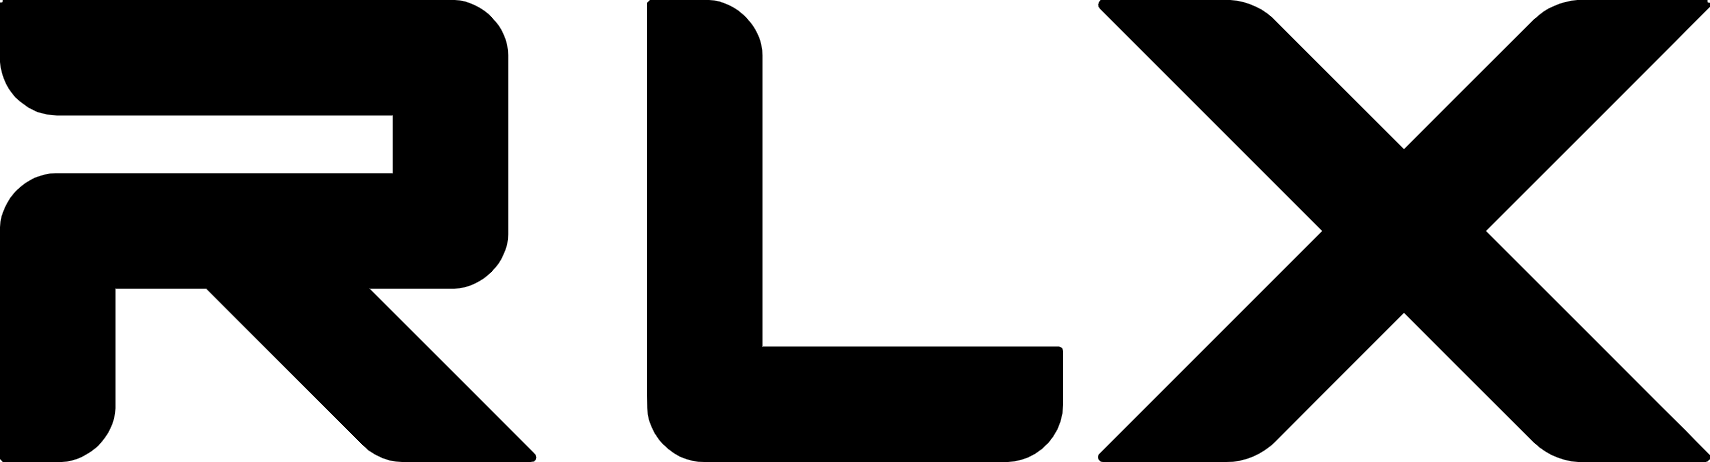 RLX Technology logo (PNG transparent)